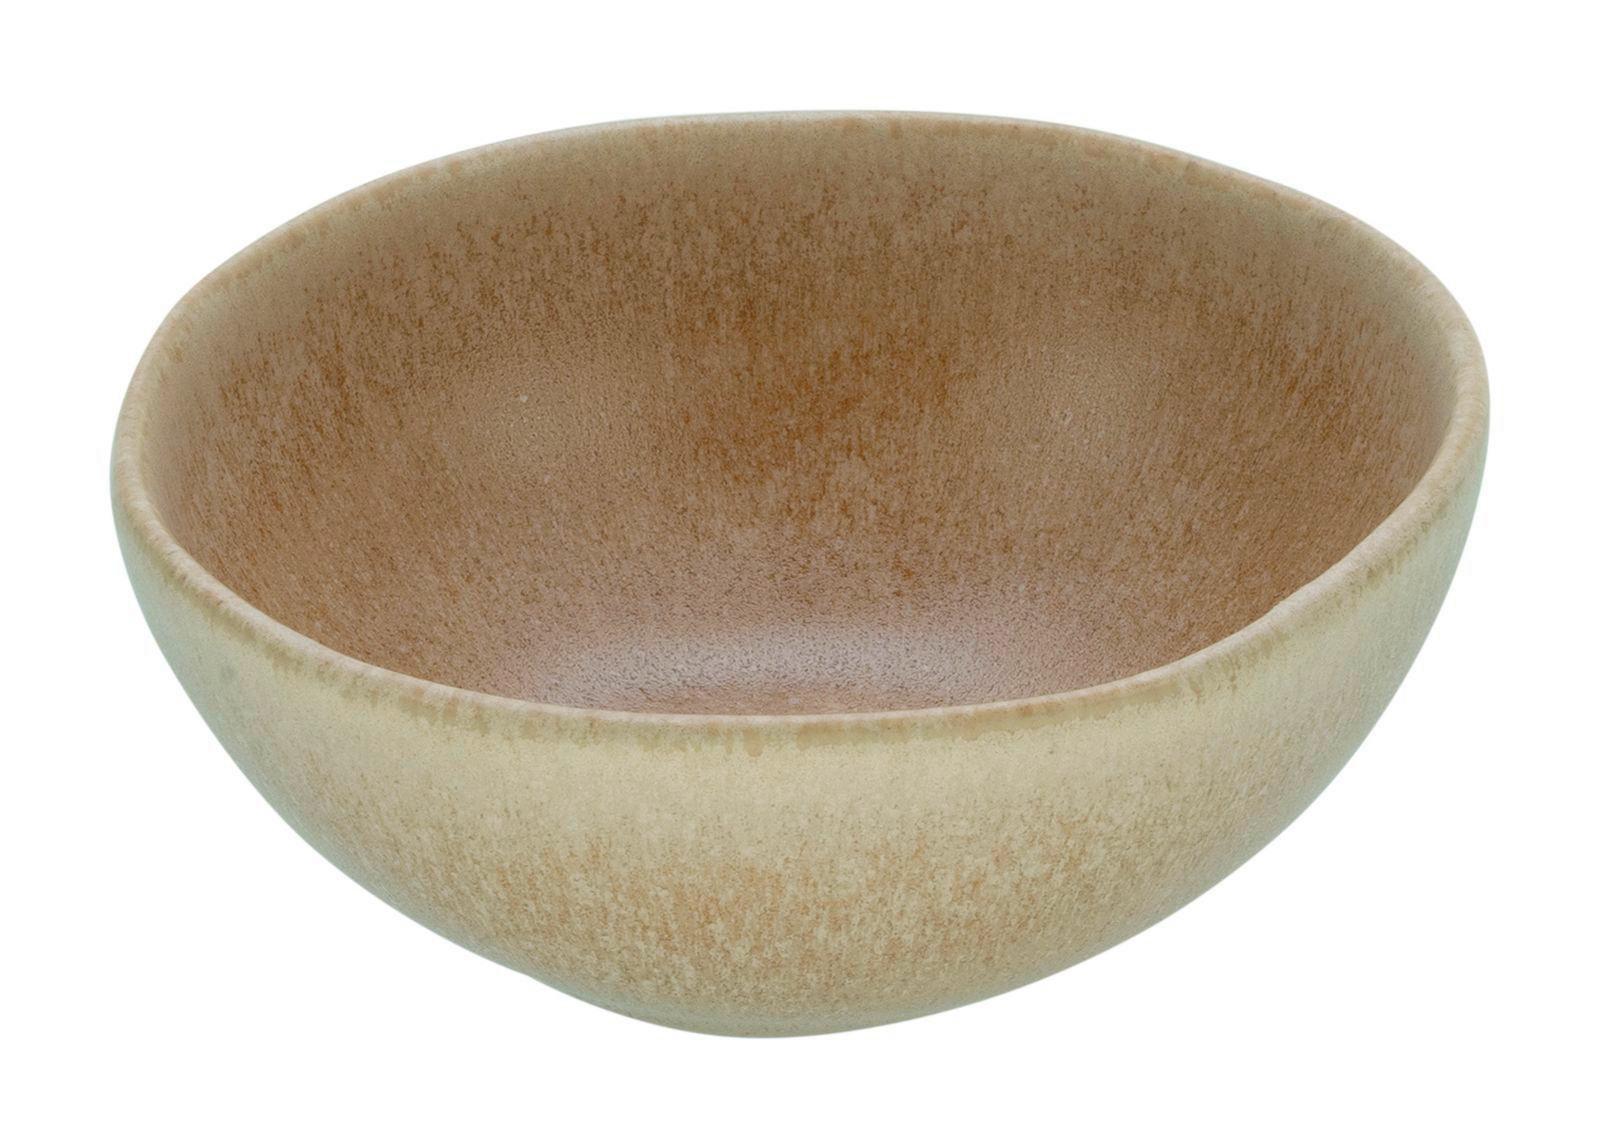 Dipschale Gourmet in Beige aus Keramik - Beige, Modern, Keramik (11/10/4,5cm) - Premium Living